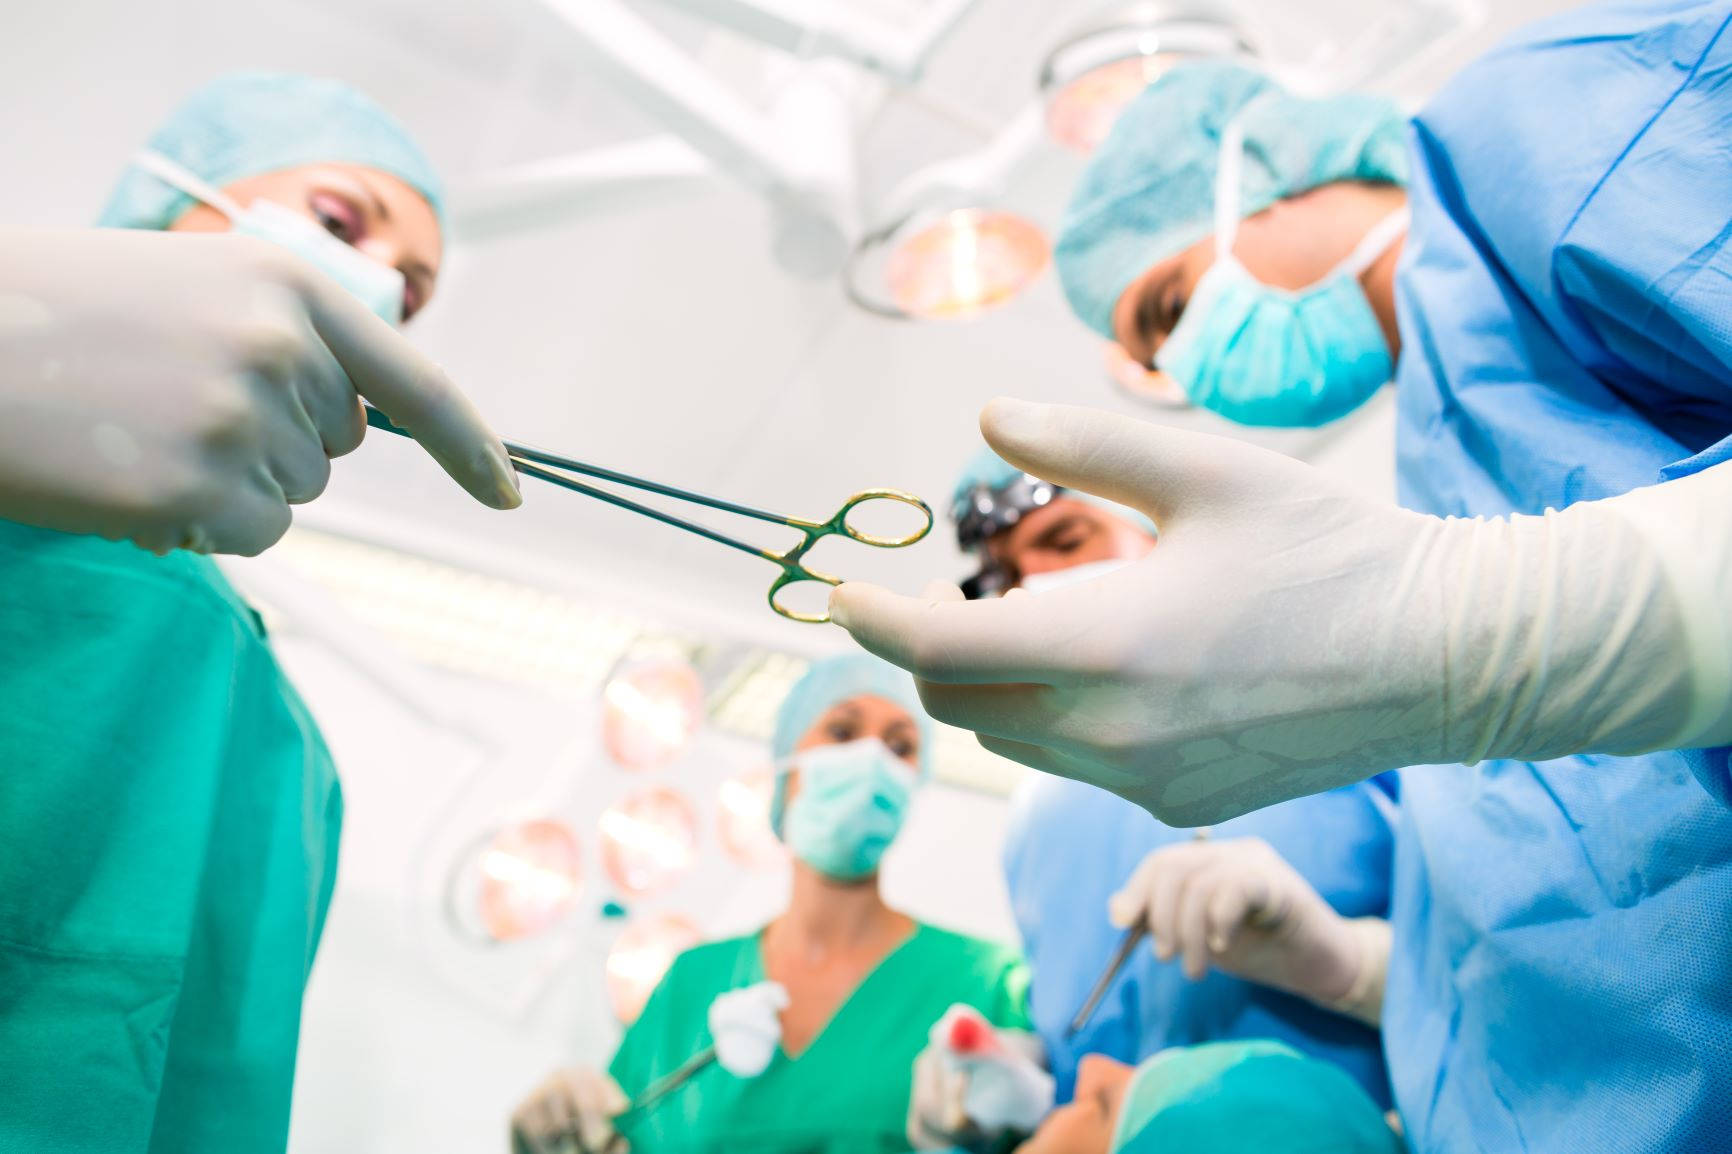 Papeltapiz De Cirujano Especializado En Instrumentos Quirúrgicos Fondo de pantalla